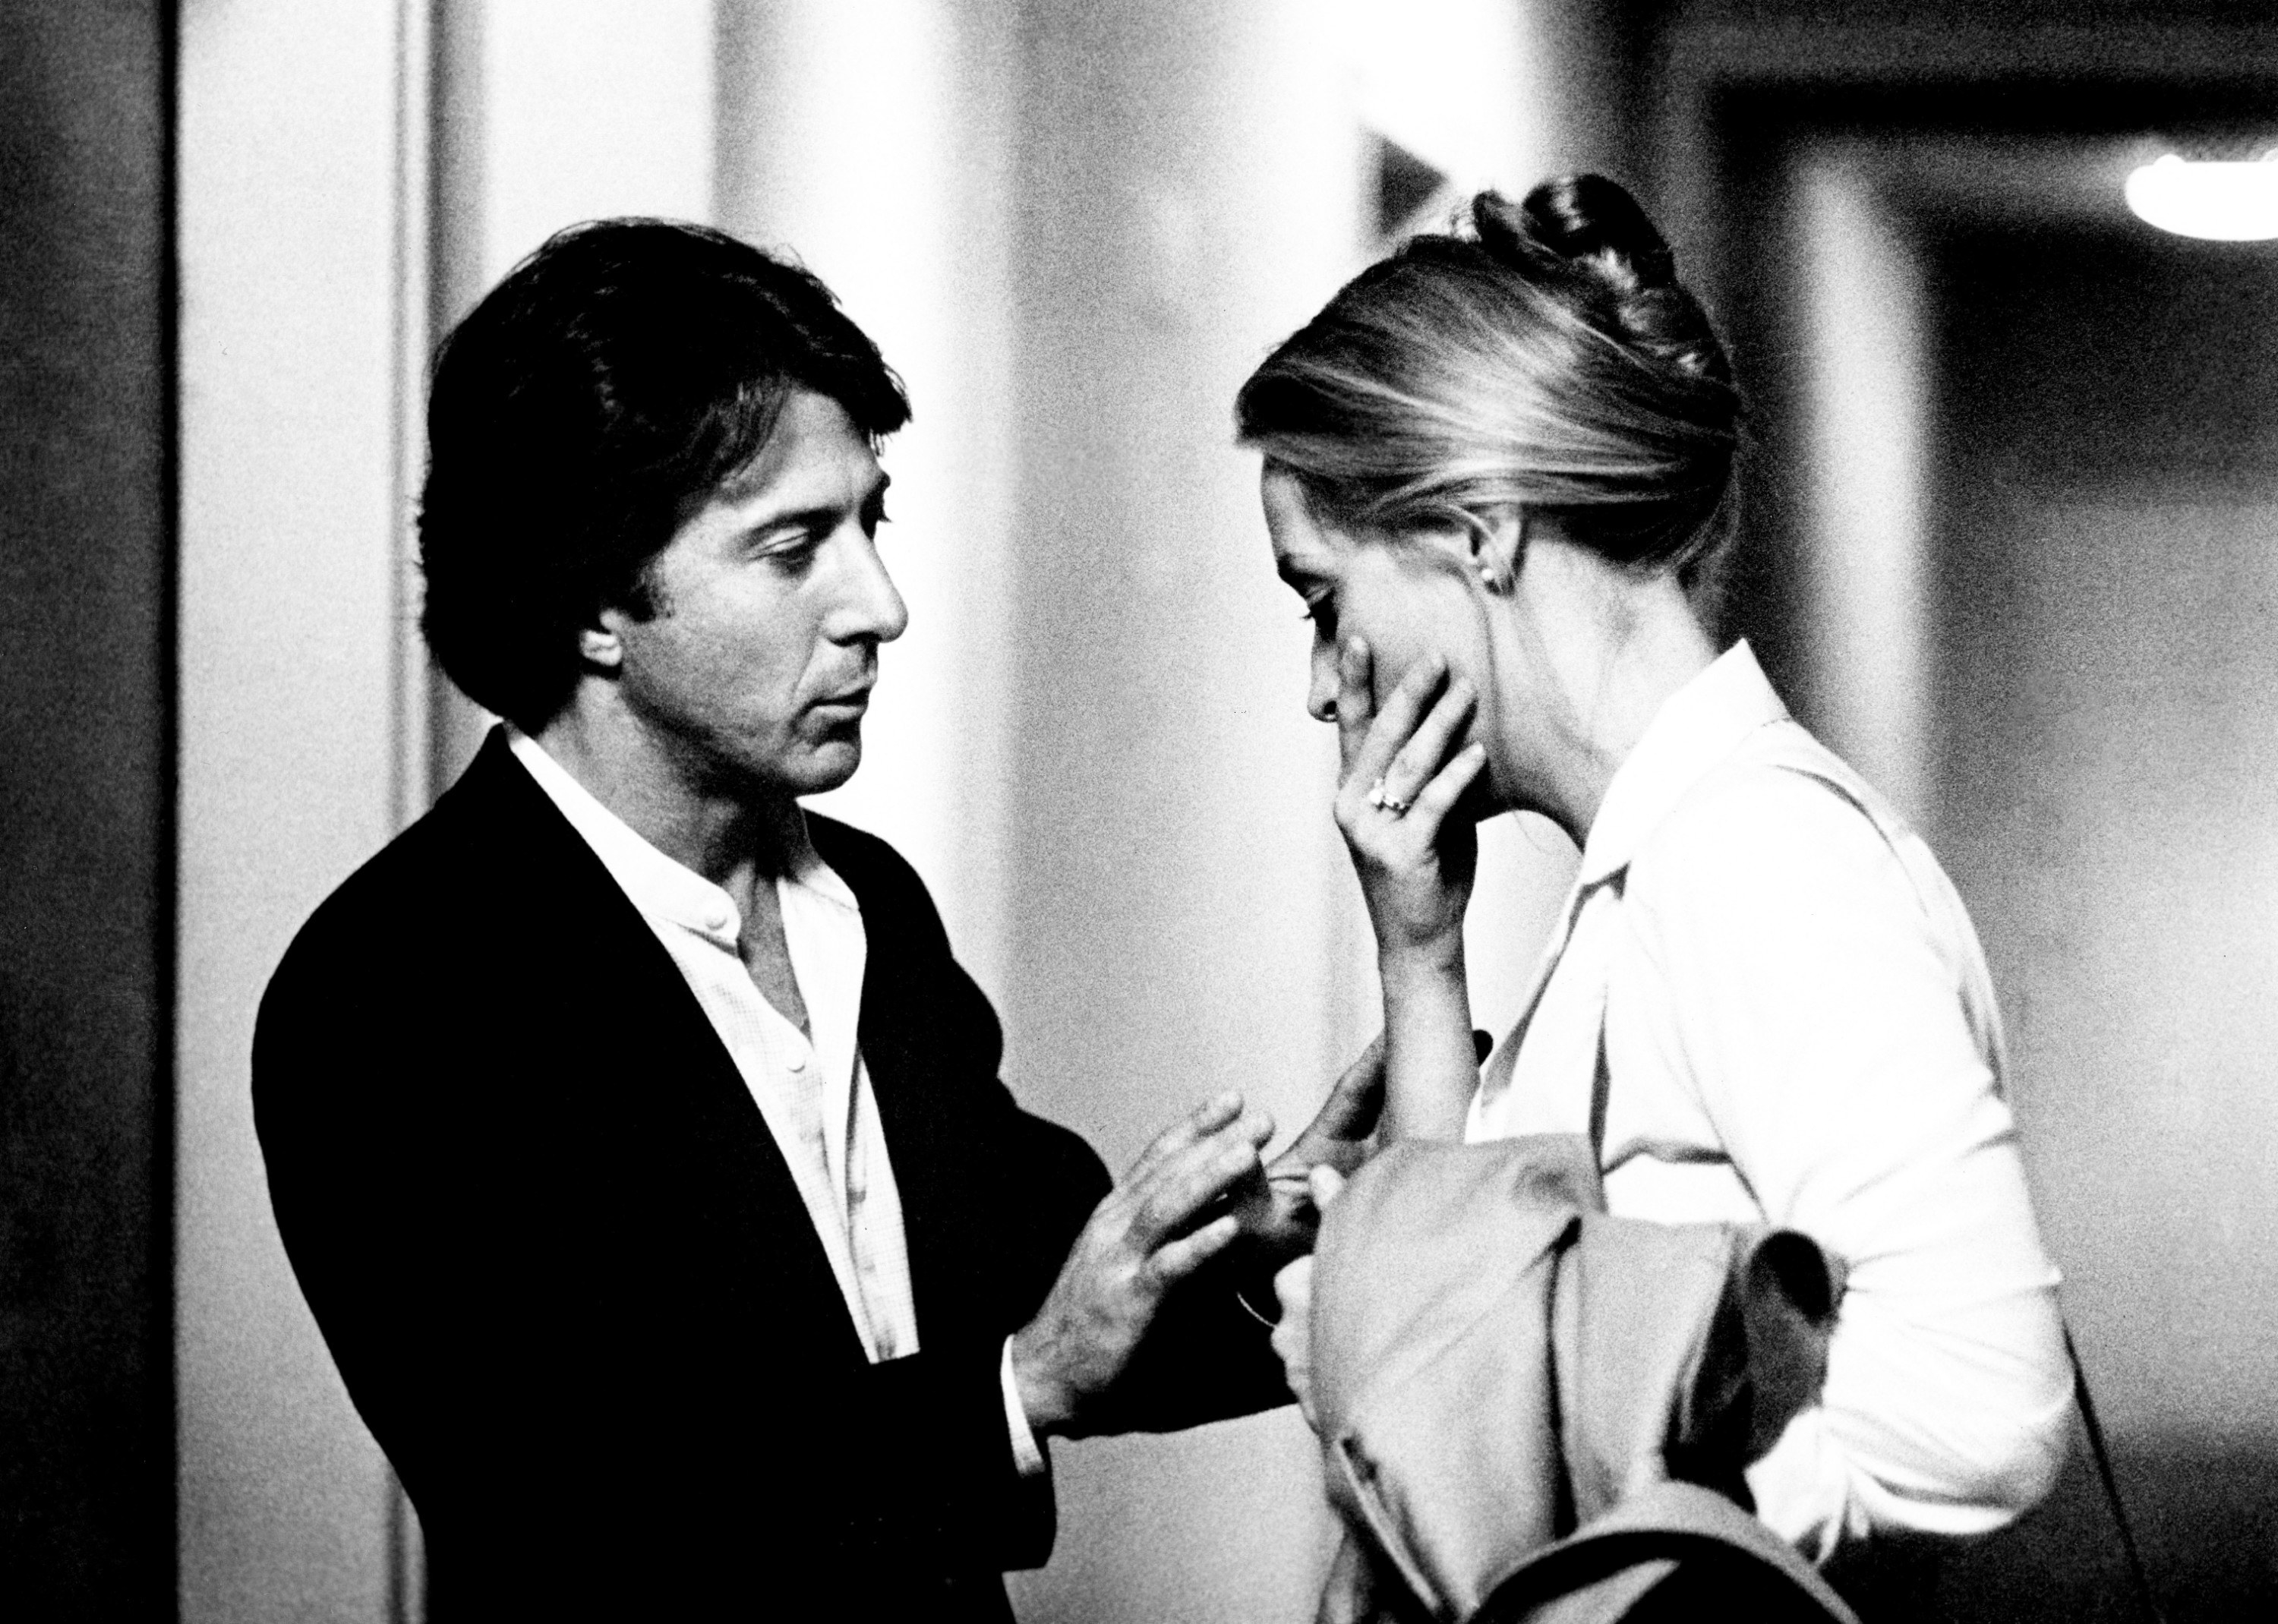 Dustin Hoffman and Meryl Streep in the movie